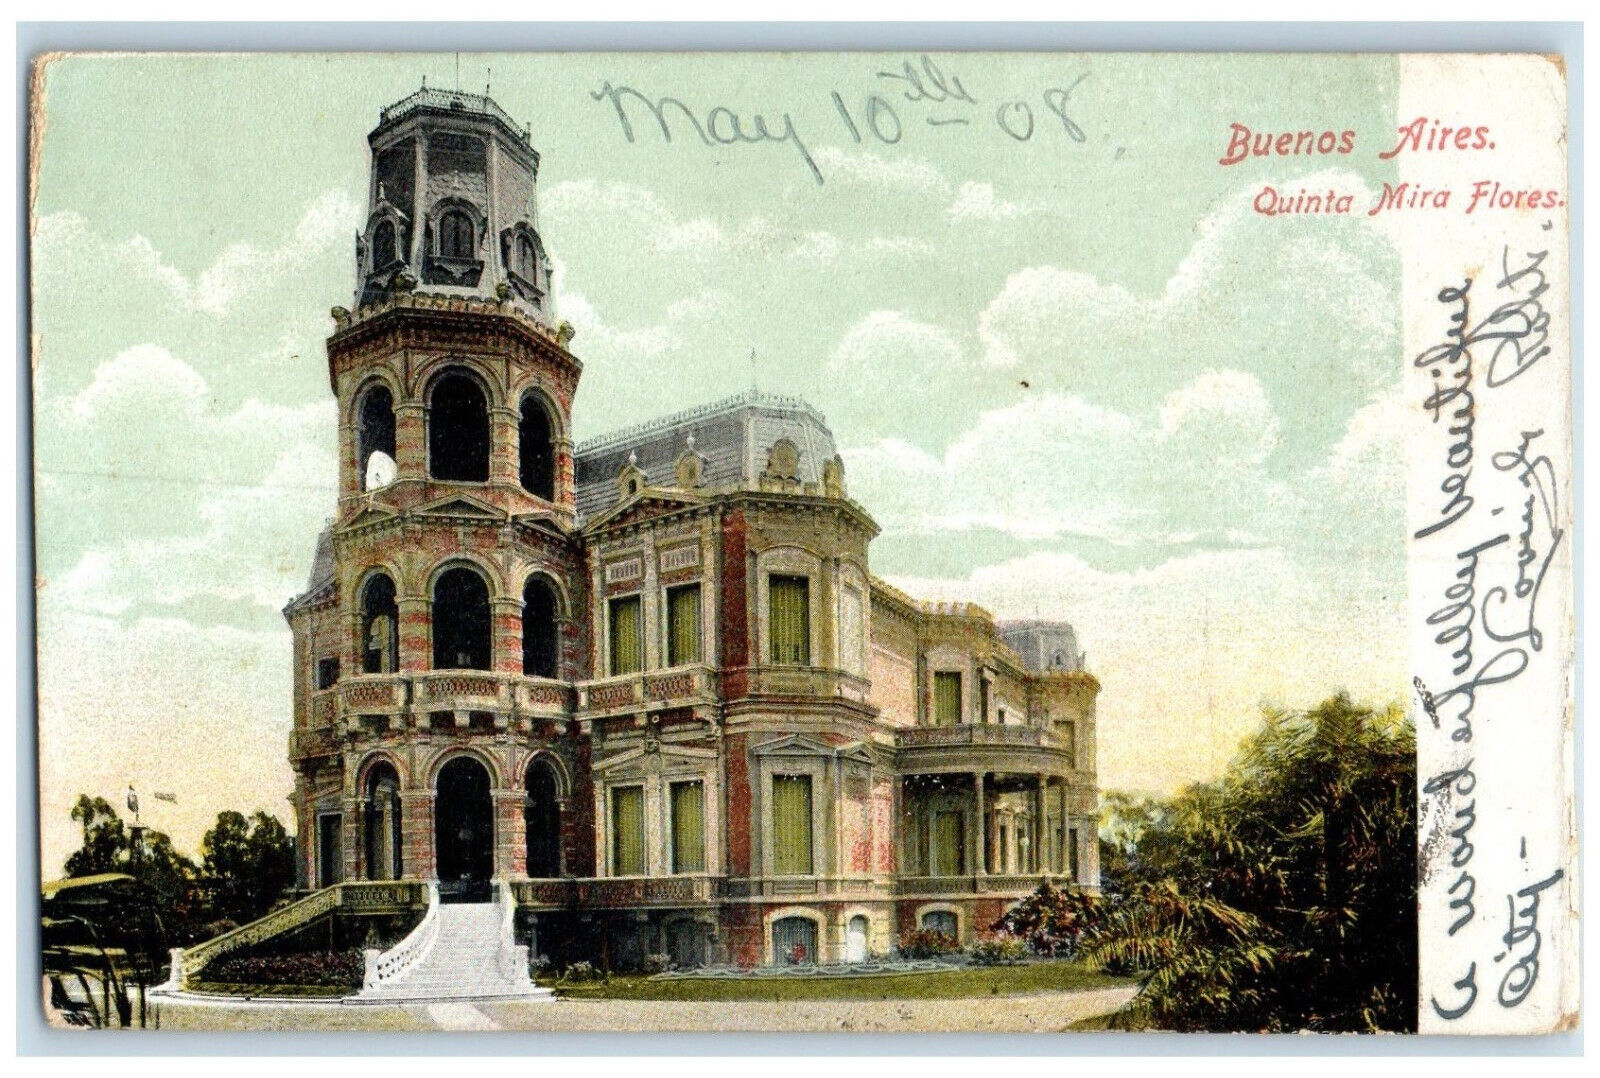 1908 Quinta Mira Flores Buenos Aires Argentina Posted Antique Postcard